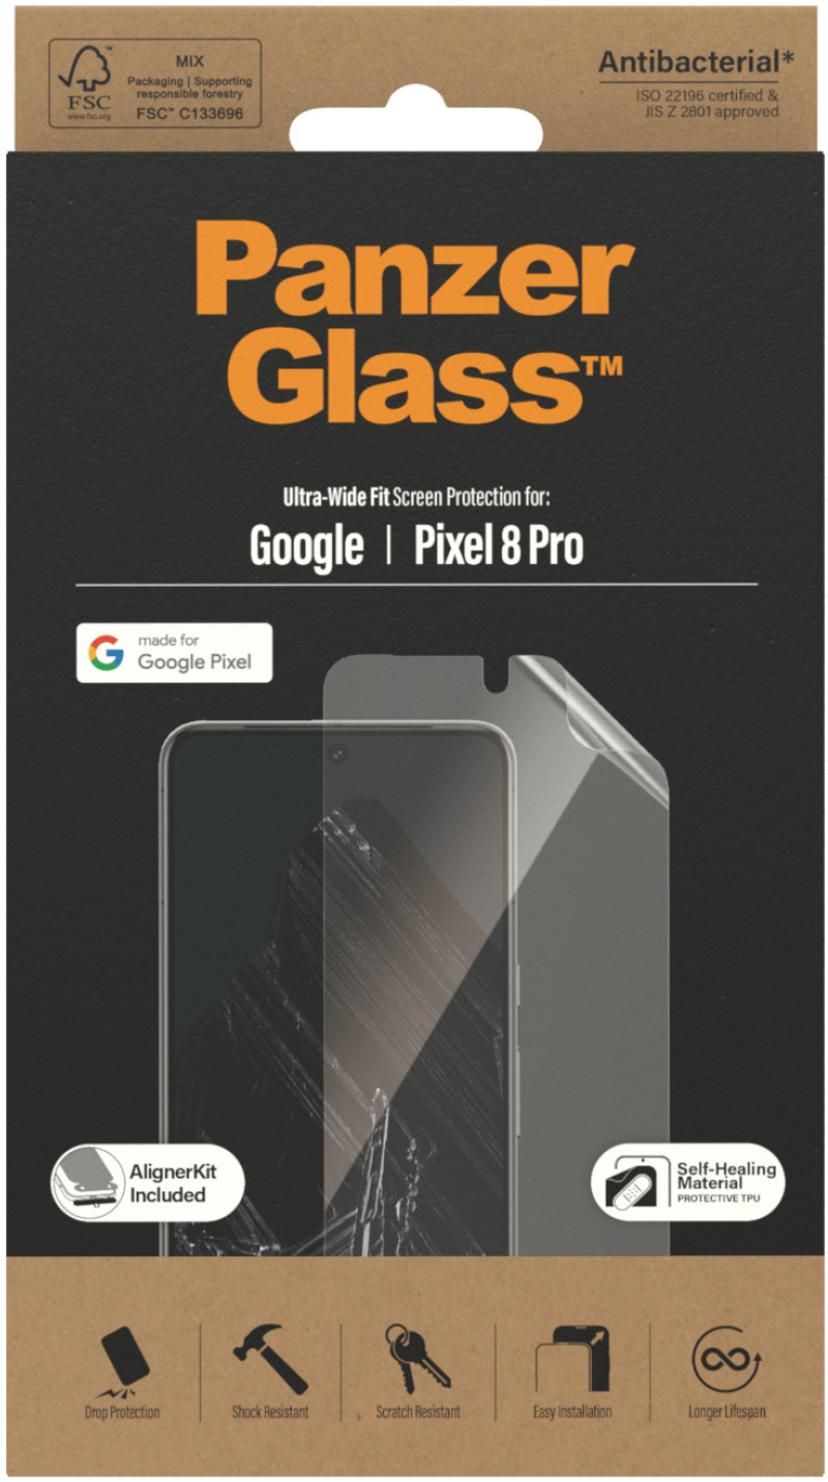 Panzerglass Ultra-Wide Fit Google - Pixel 8 Pro